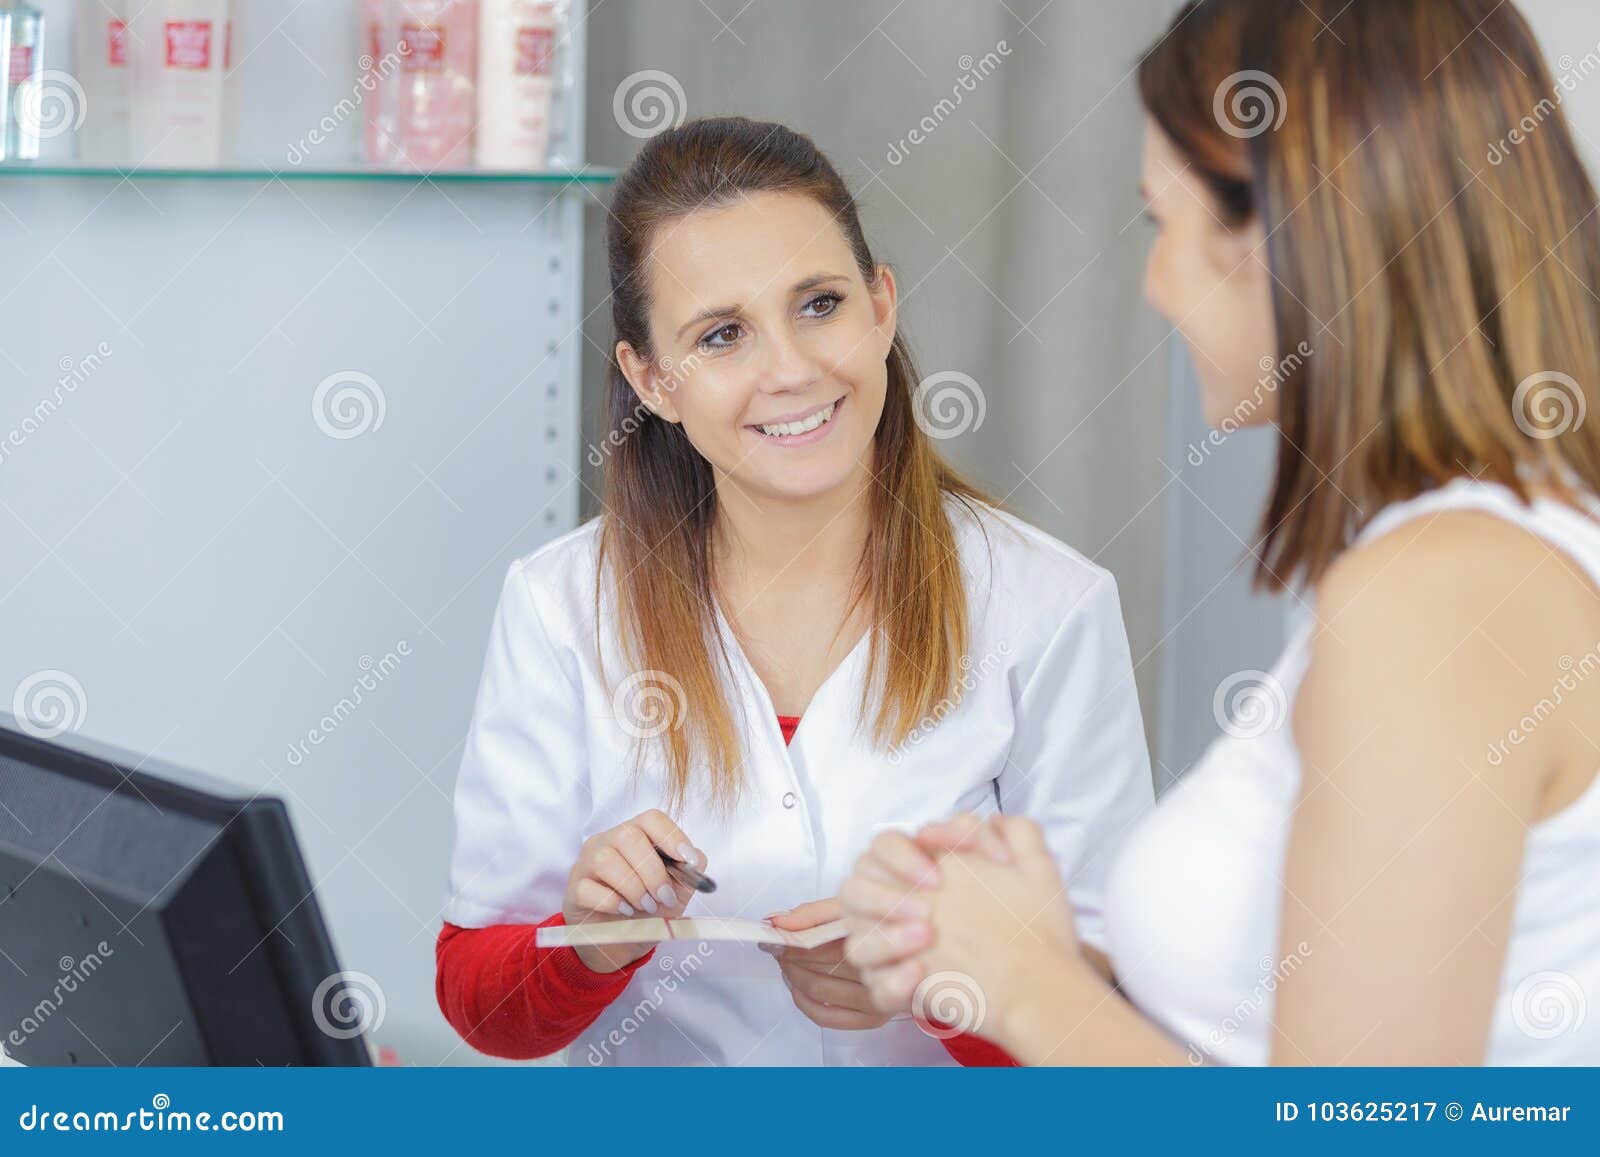 customer having inquiry in dermatology clinic